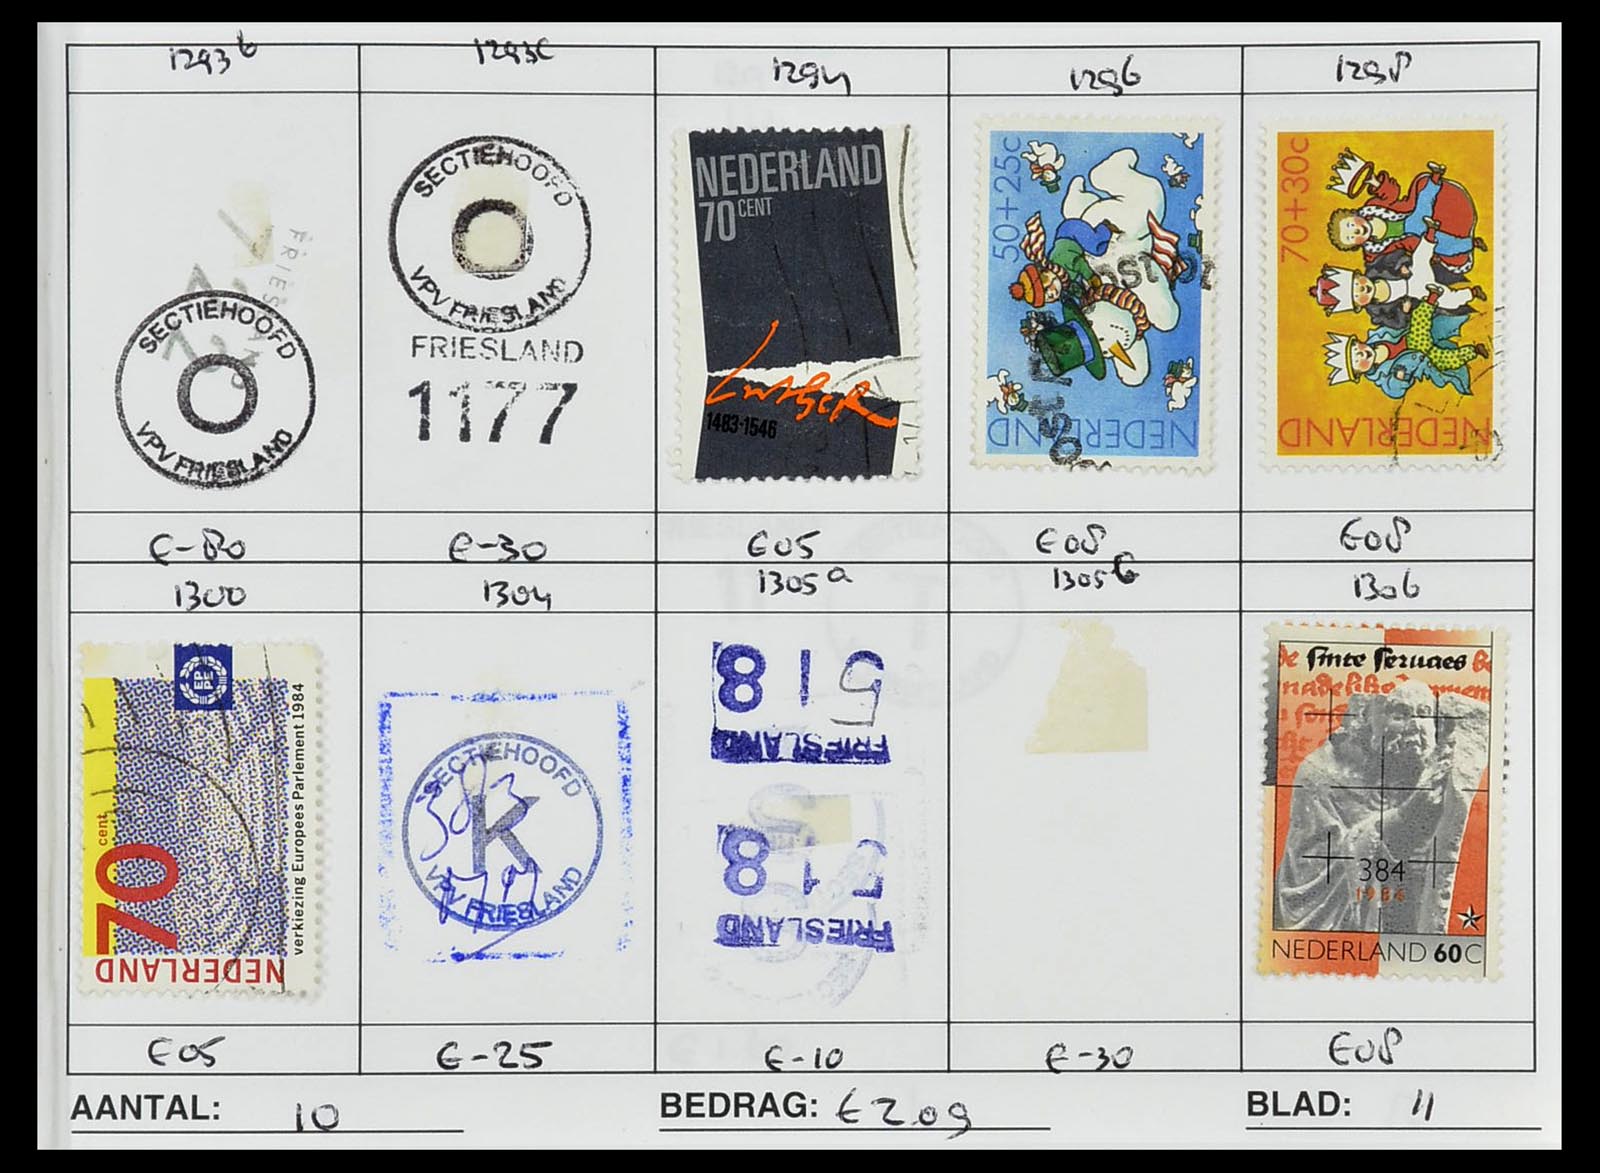 34612 0980 - Stamp Collection 34612 Wereld rondzendboekjes.